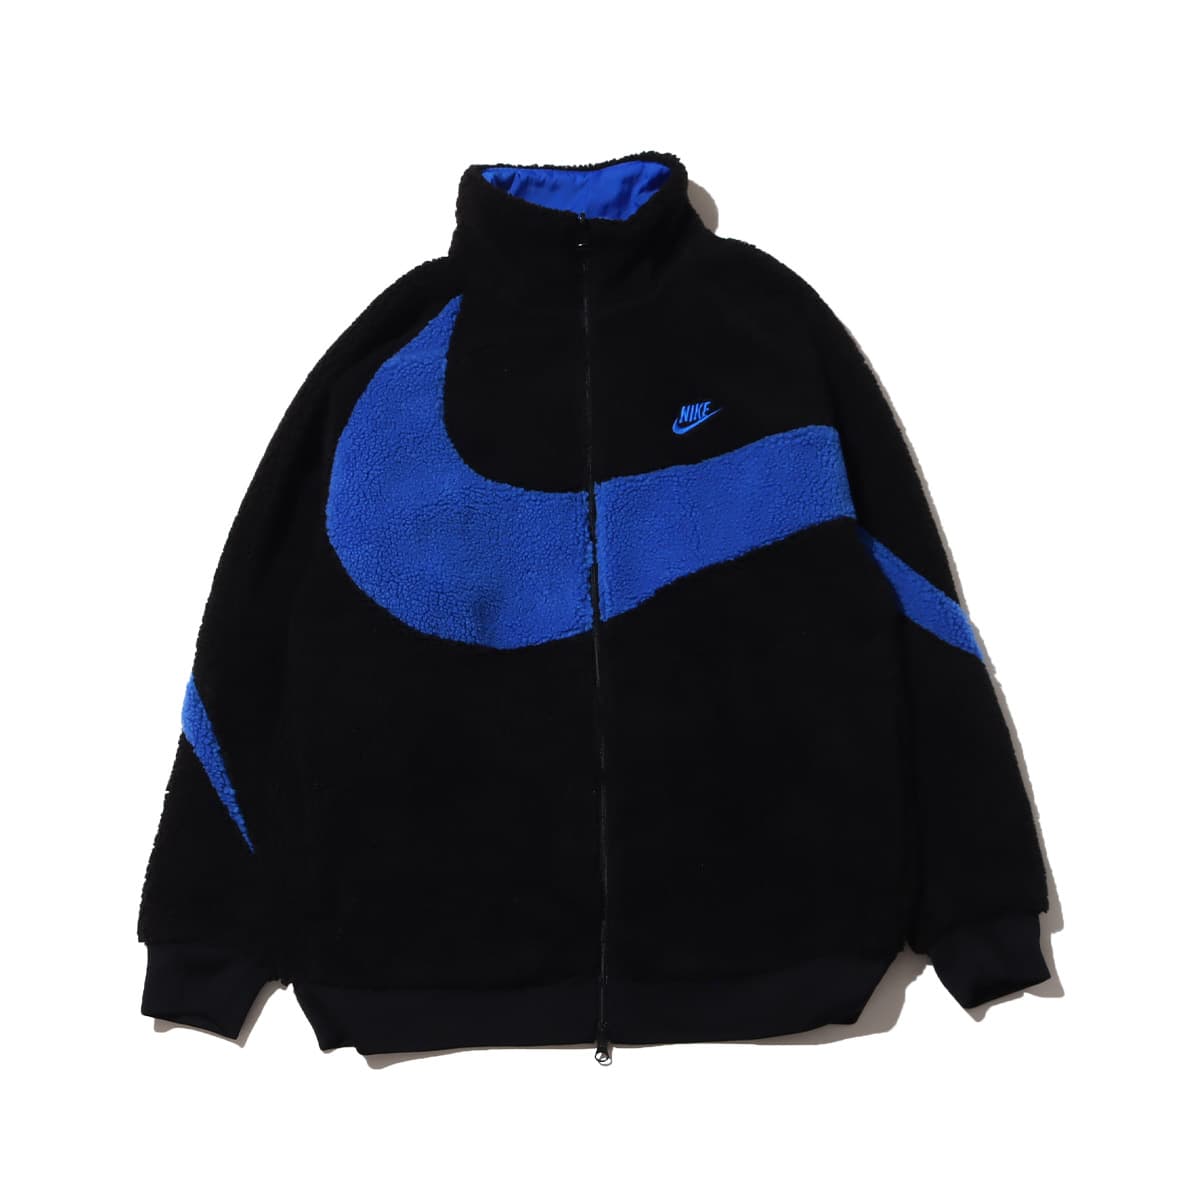 Nike Drops "Big Swoosh" Reversible Fleece Jackets in New Colors